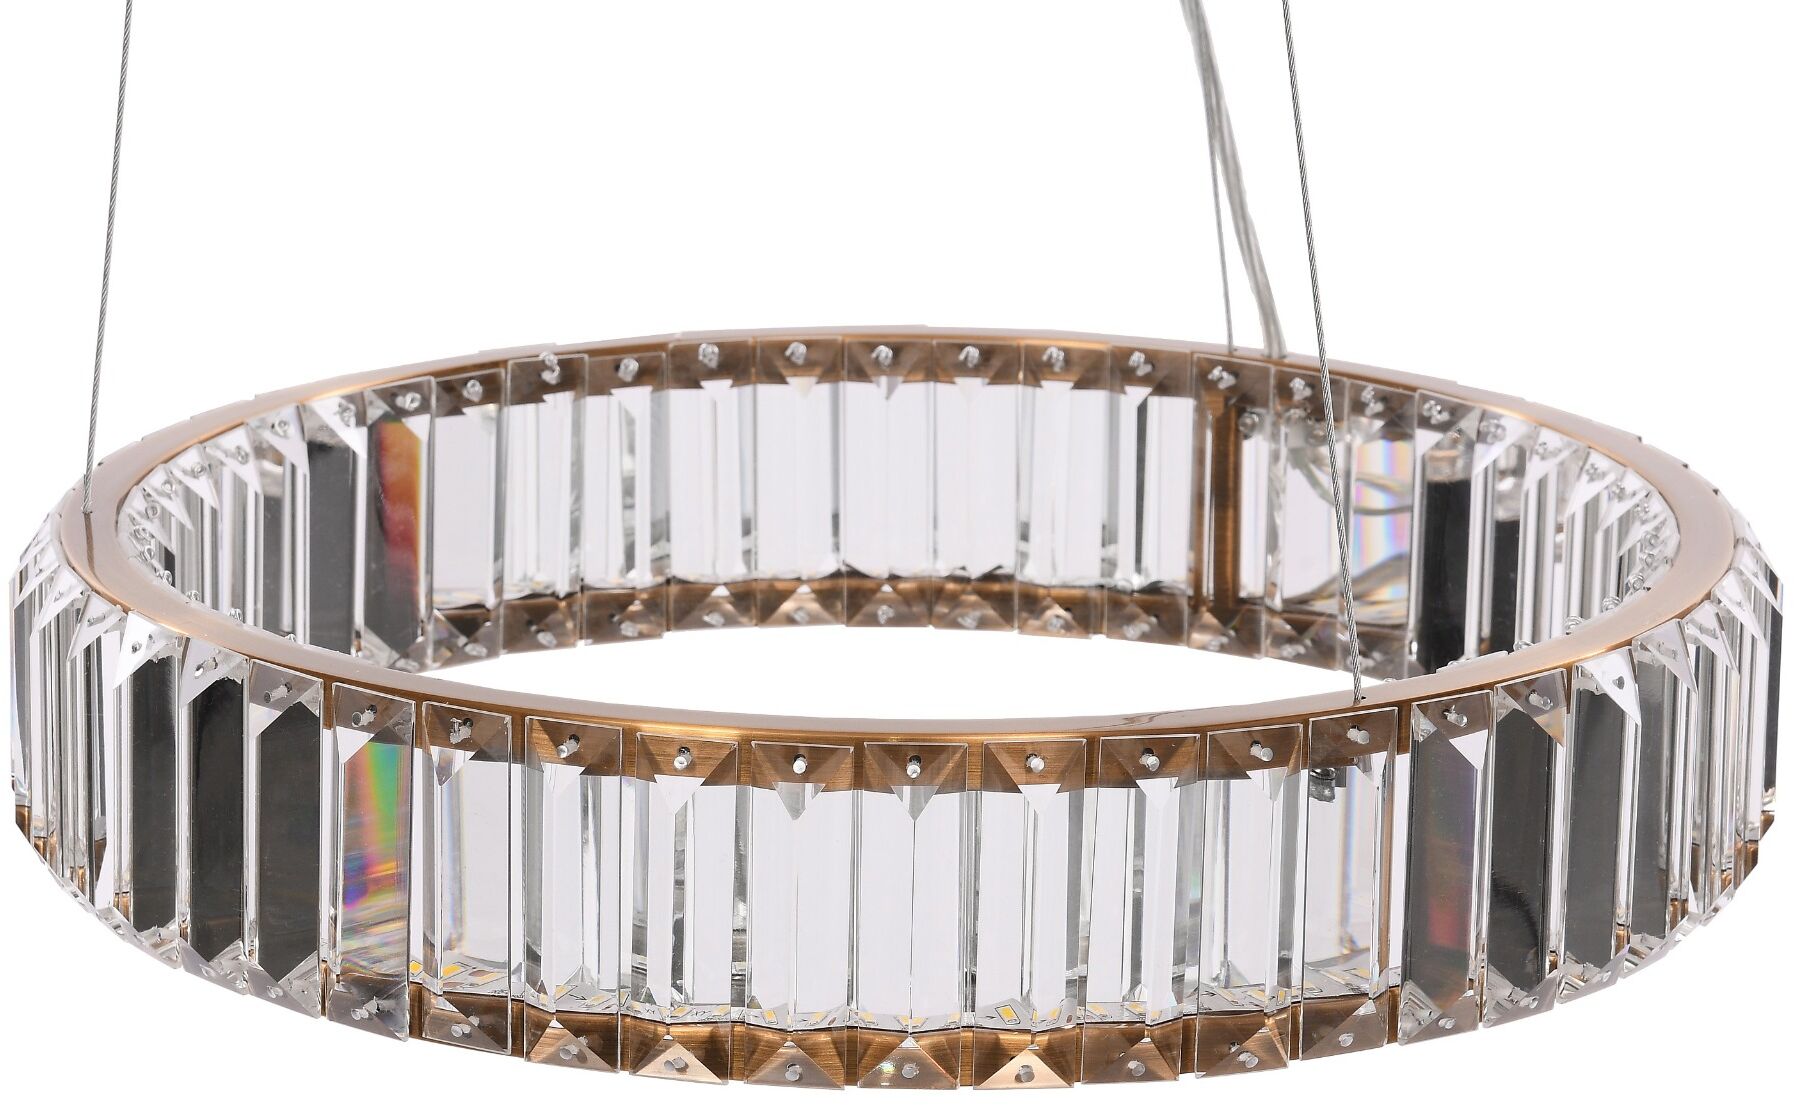 Lampa wisząca Ring Crystal M śr.40 cm